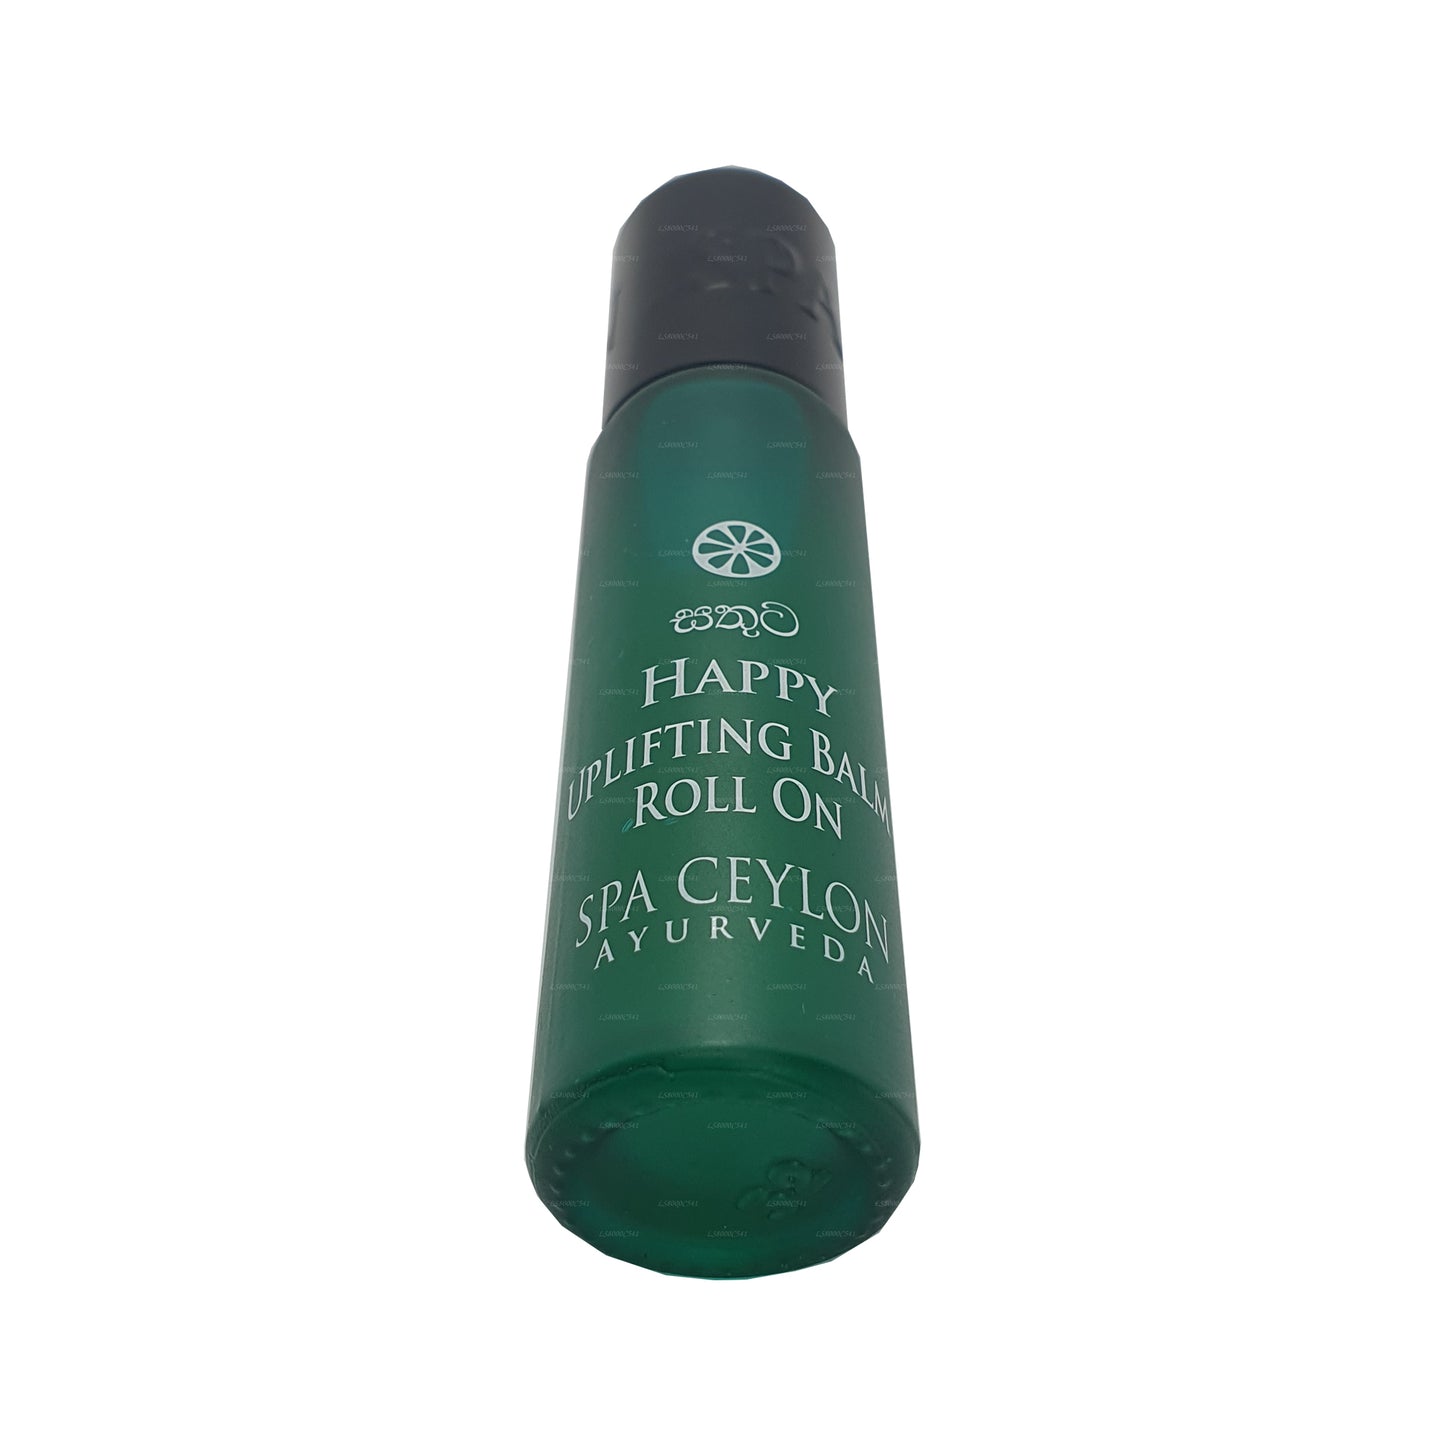 Spa Ceylon Happy Uplifting Balsam, Roll-On, 10 ml